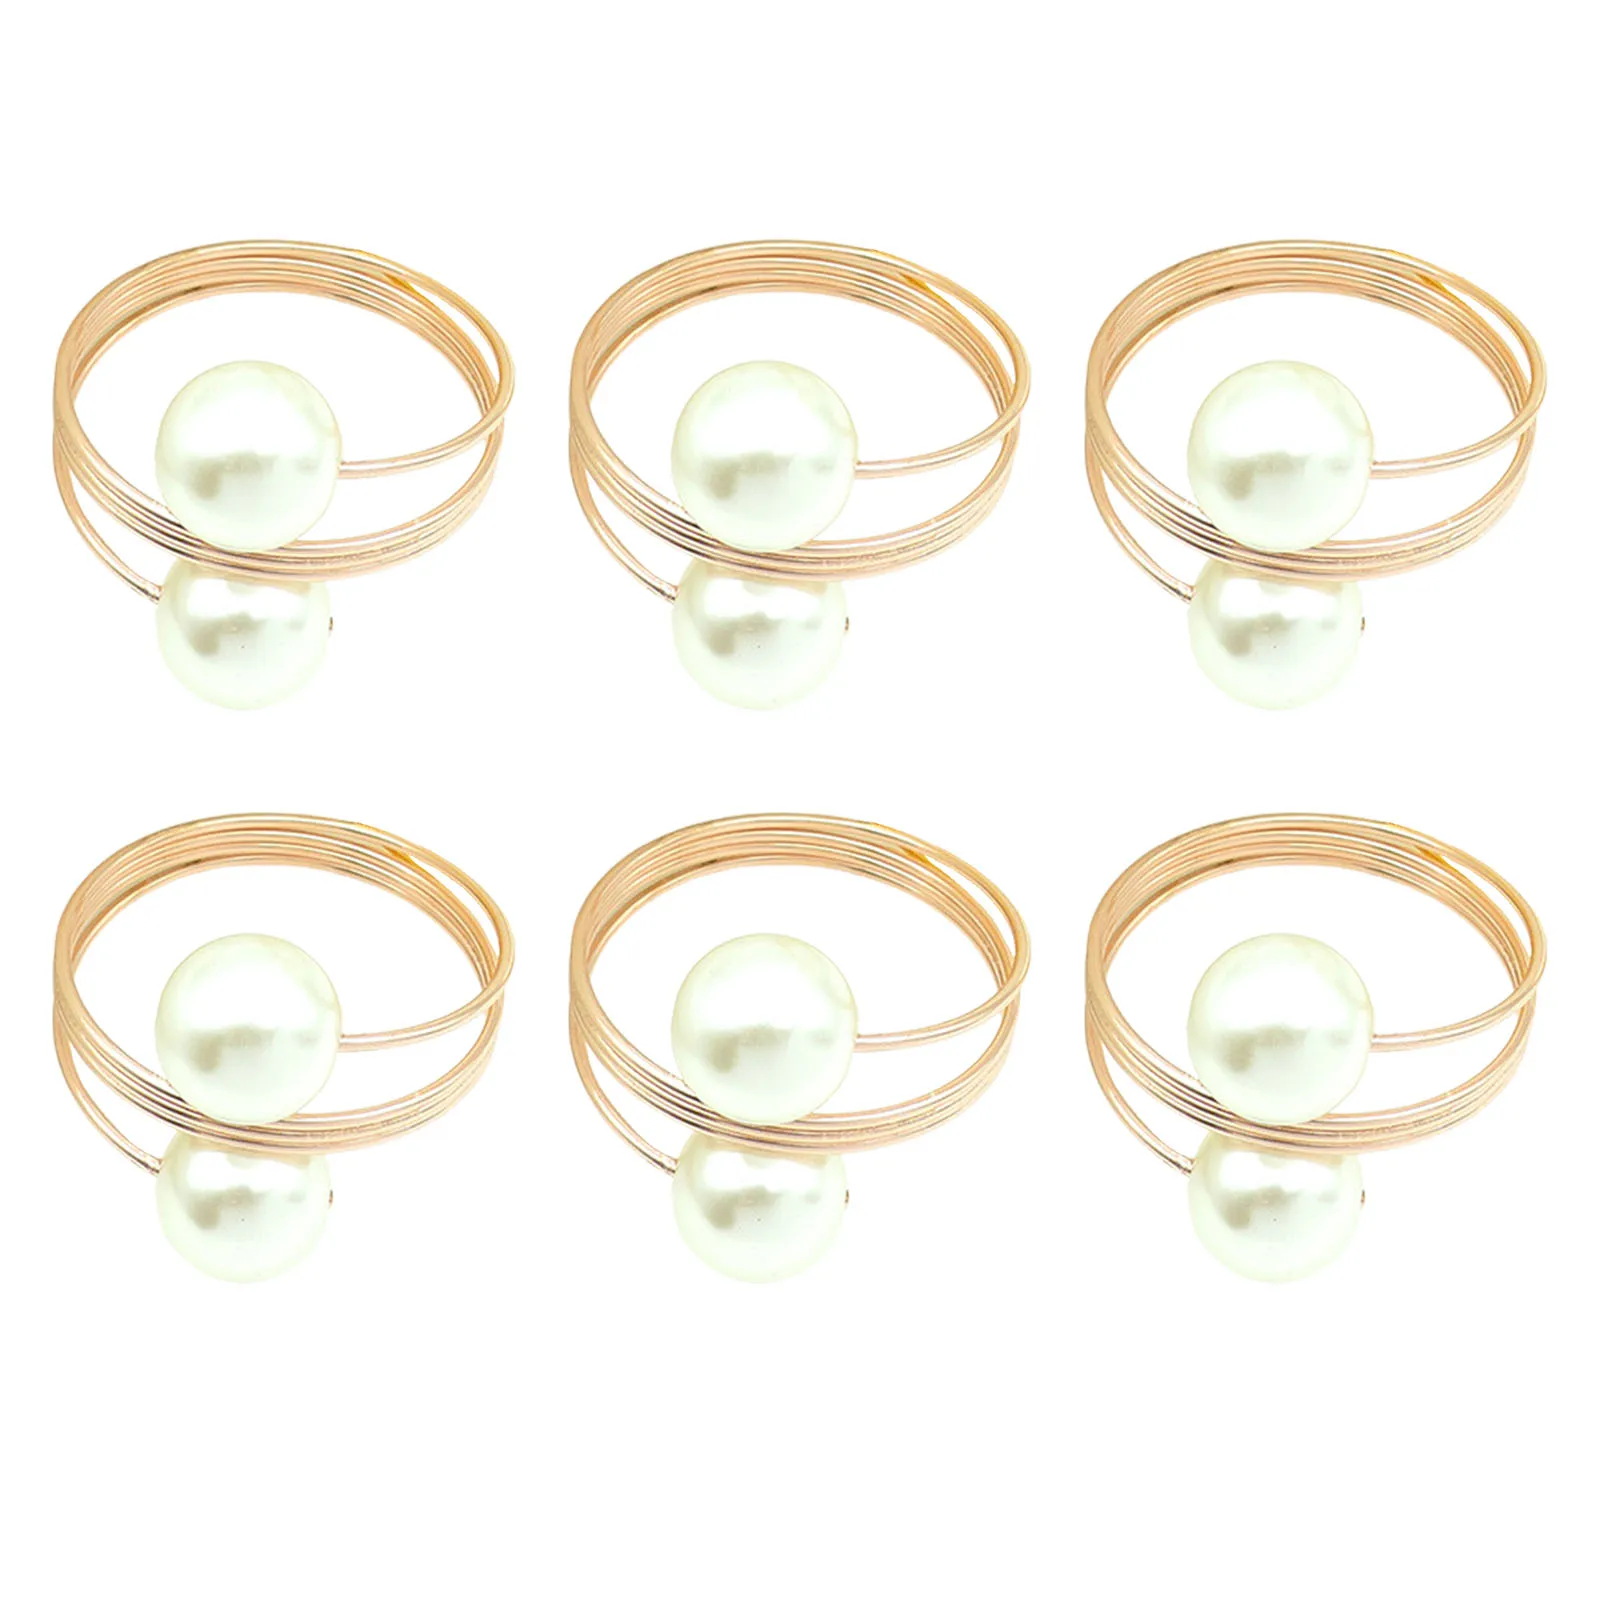 

6 Pcs Pearl Serviette Rings Christmas Napkin Rings Holder Silver Rose Gold Serviette Decors For Party Wedding Gathering Dinner